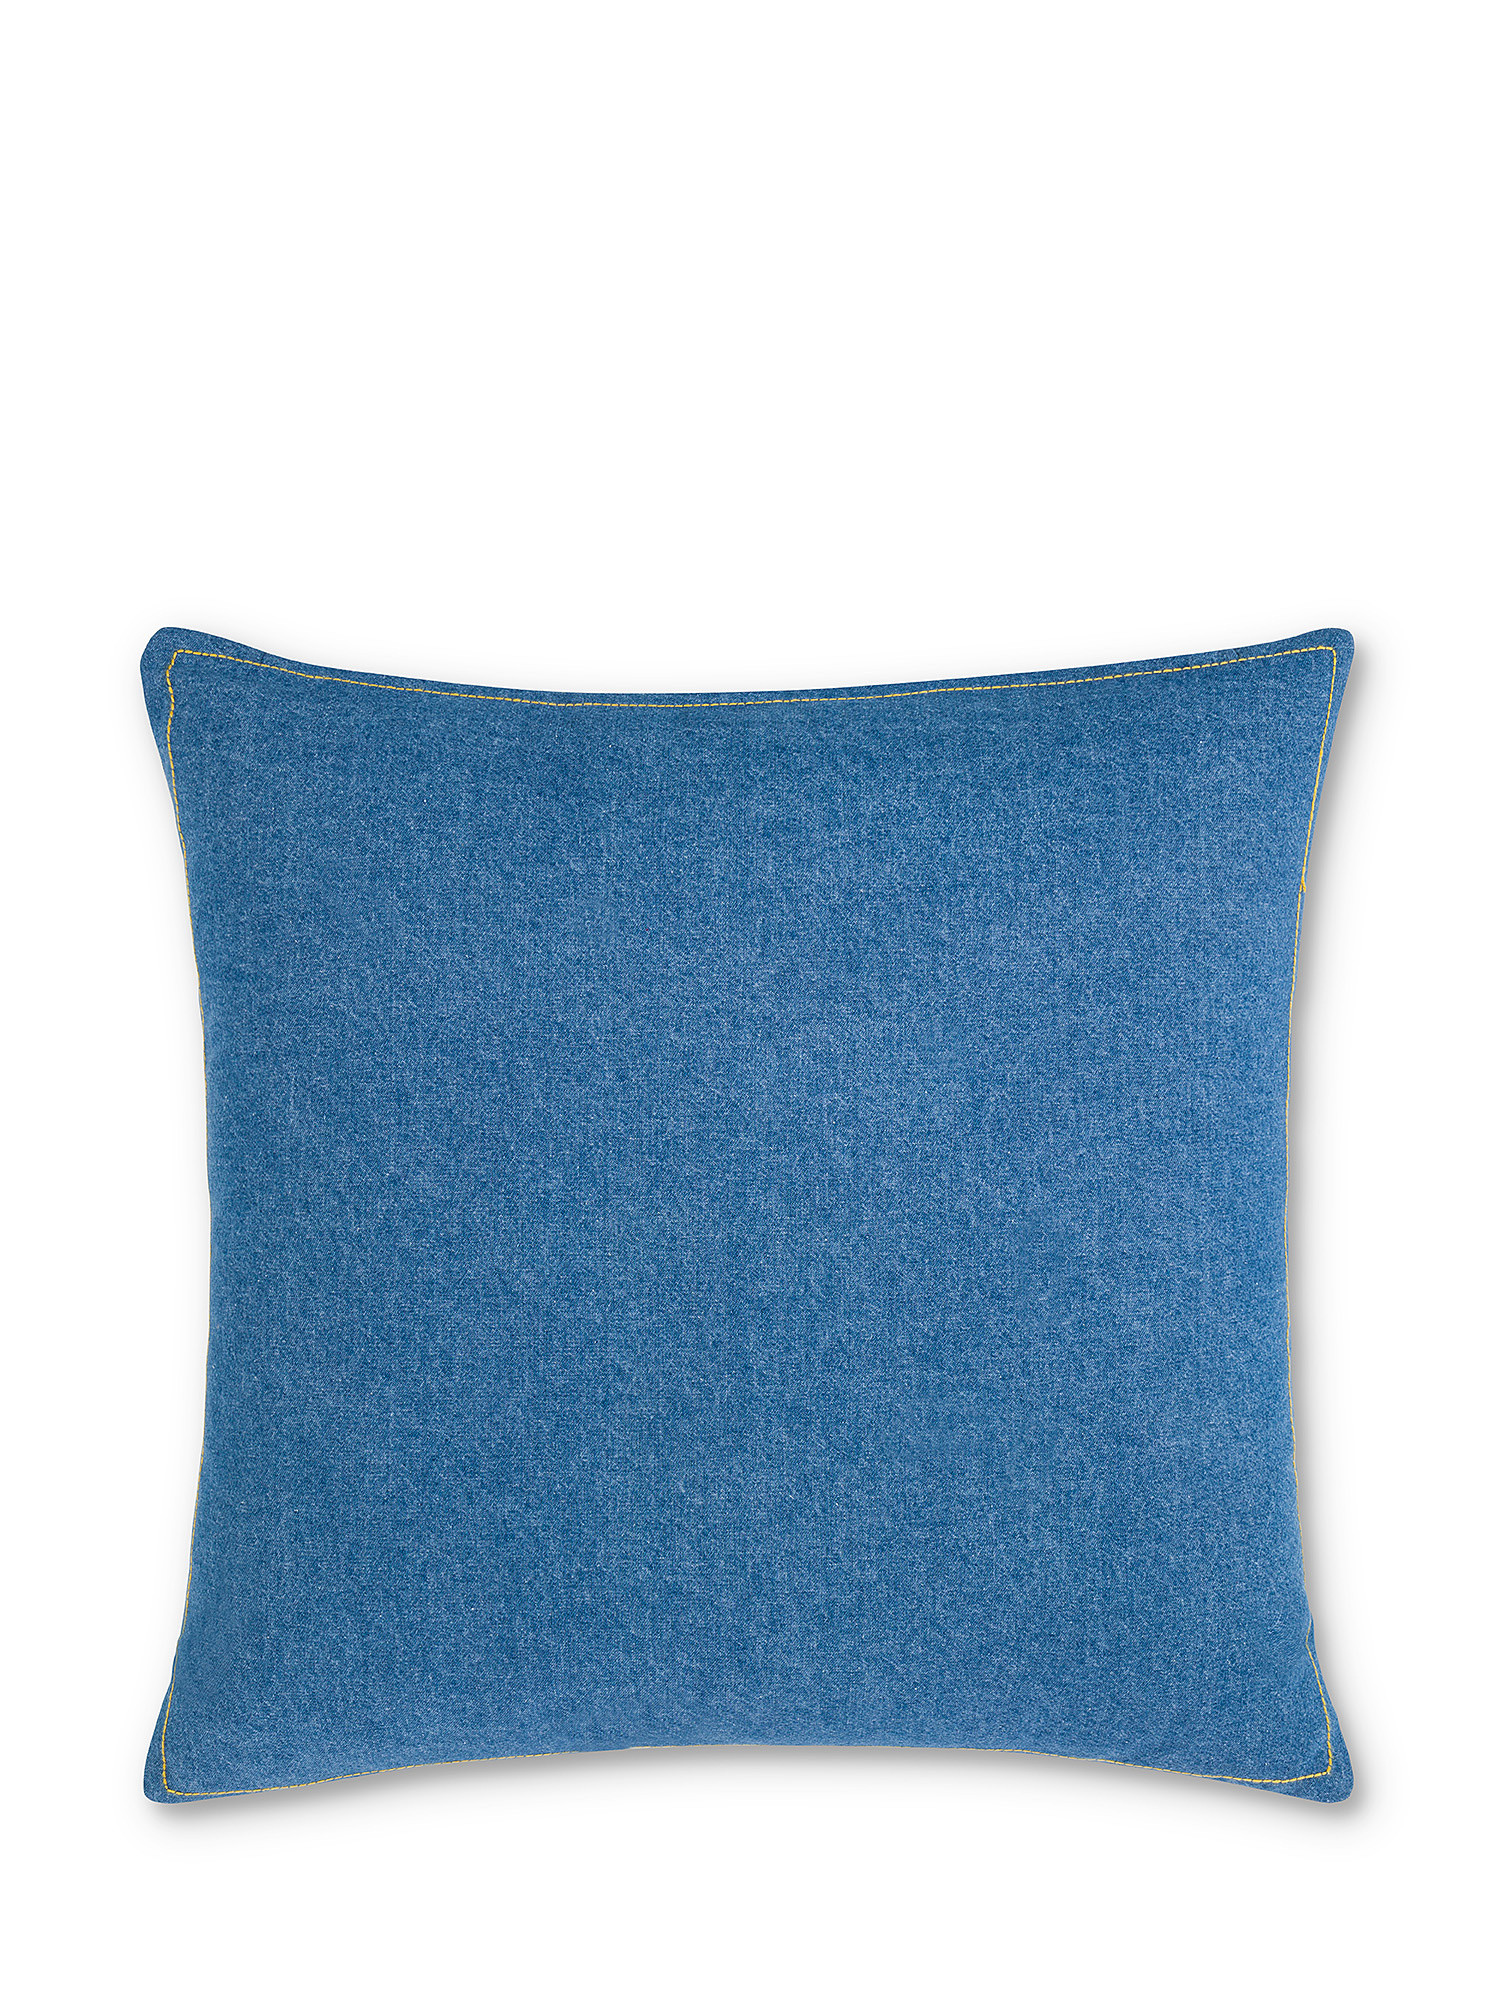 Cuscino cotone denim ricamo tasca 45x45cm, Azzurro, large image number 1